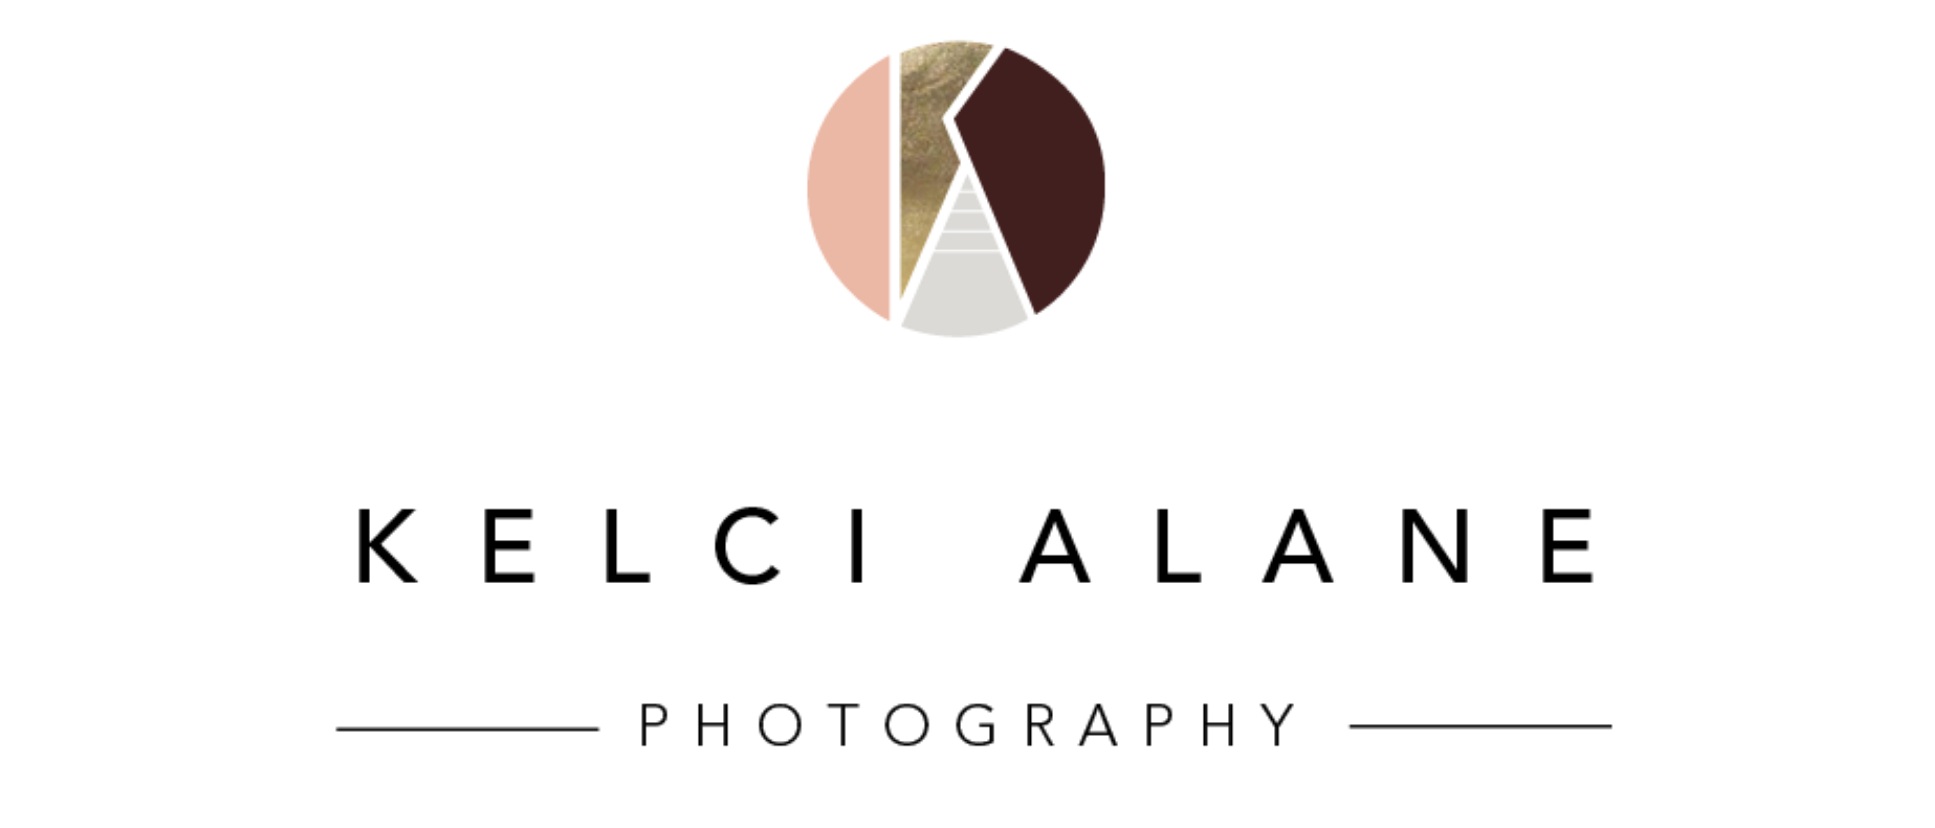 Kelci Alane Photography